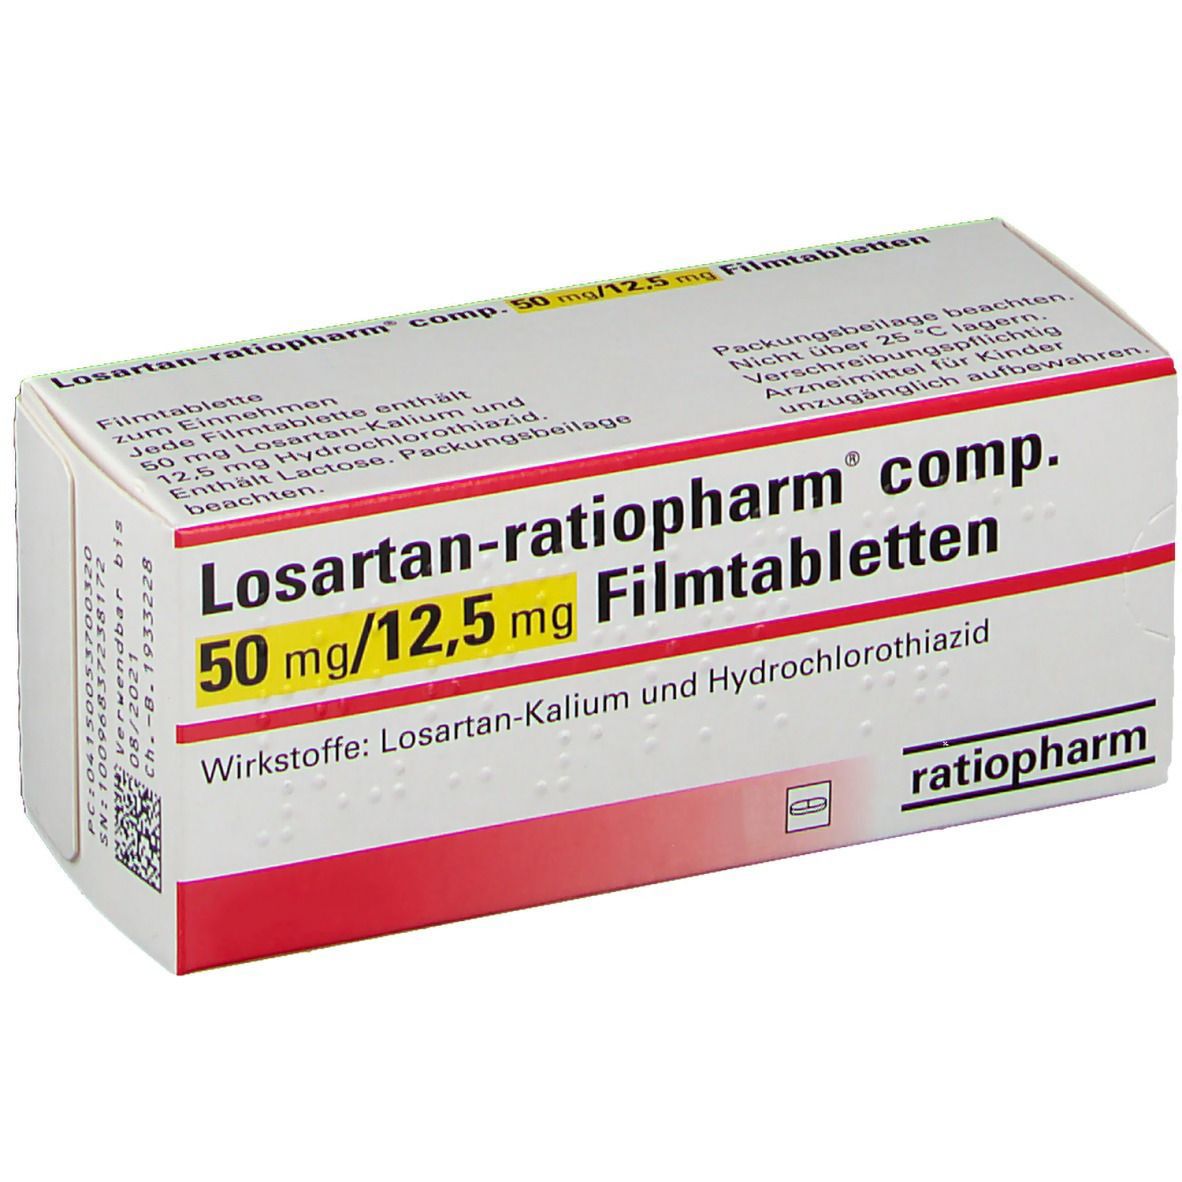 Losartan-ratiopharm® comp. 50 mg/12,5 mg